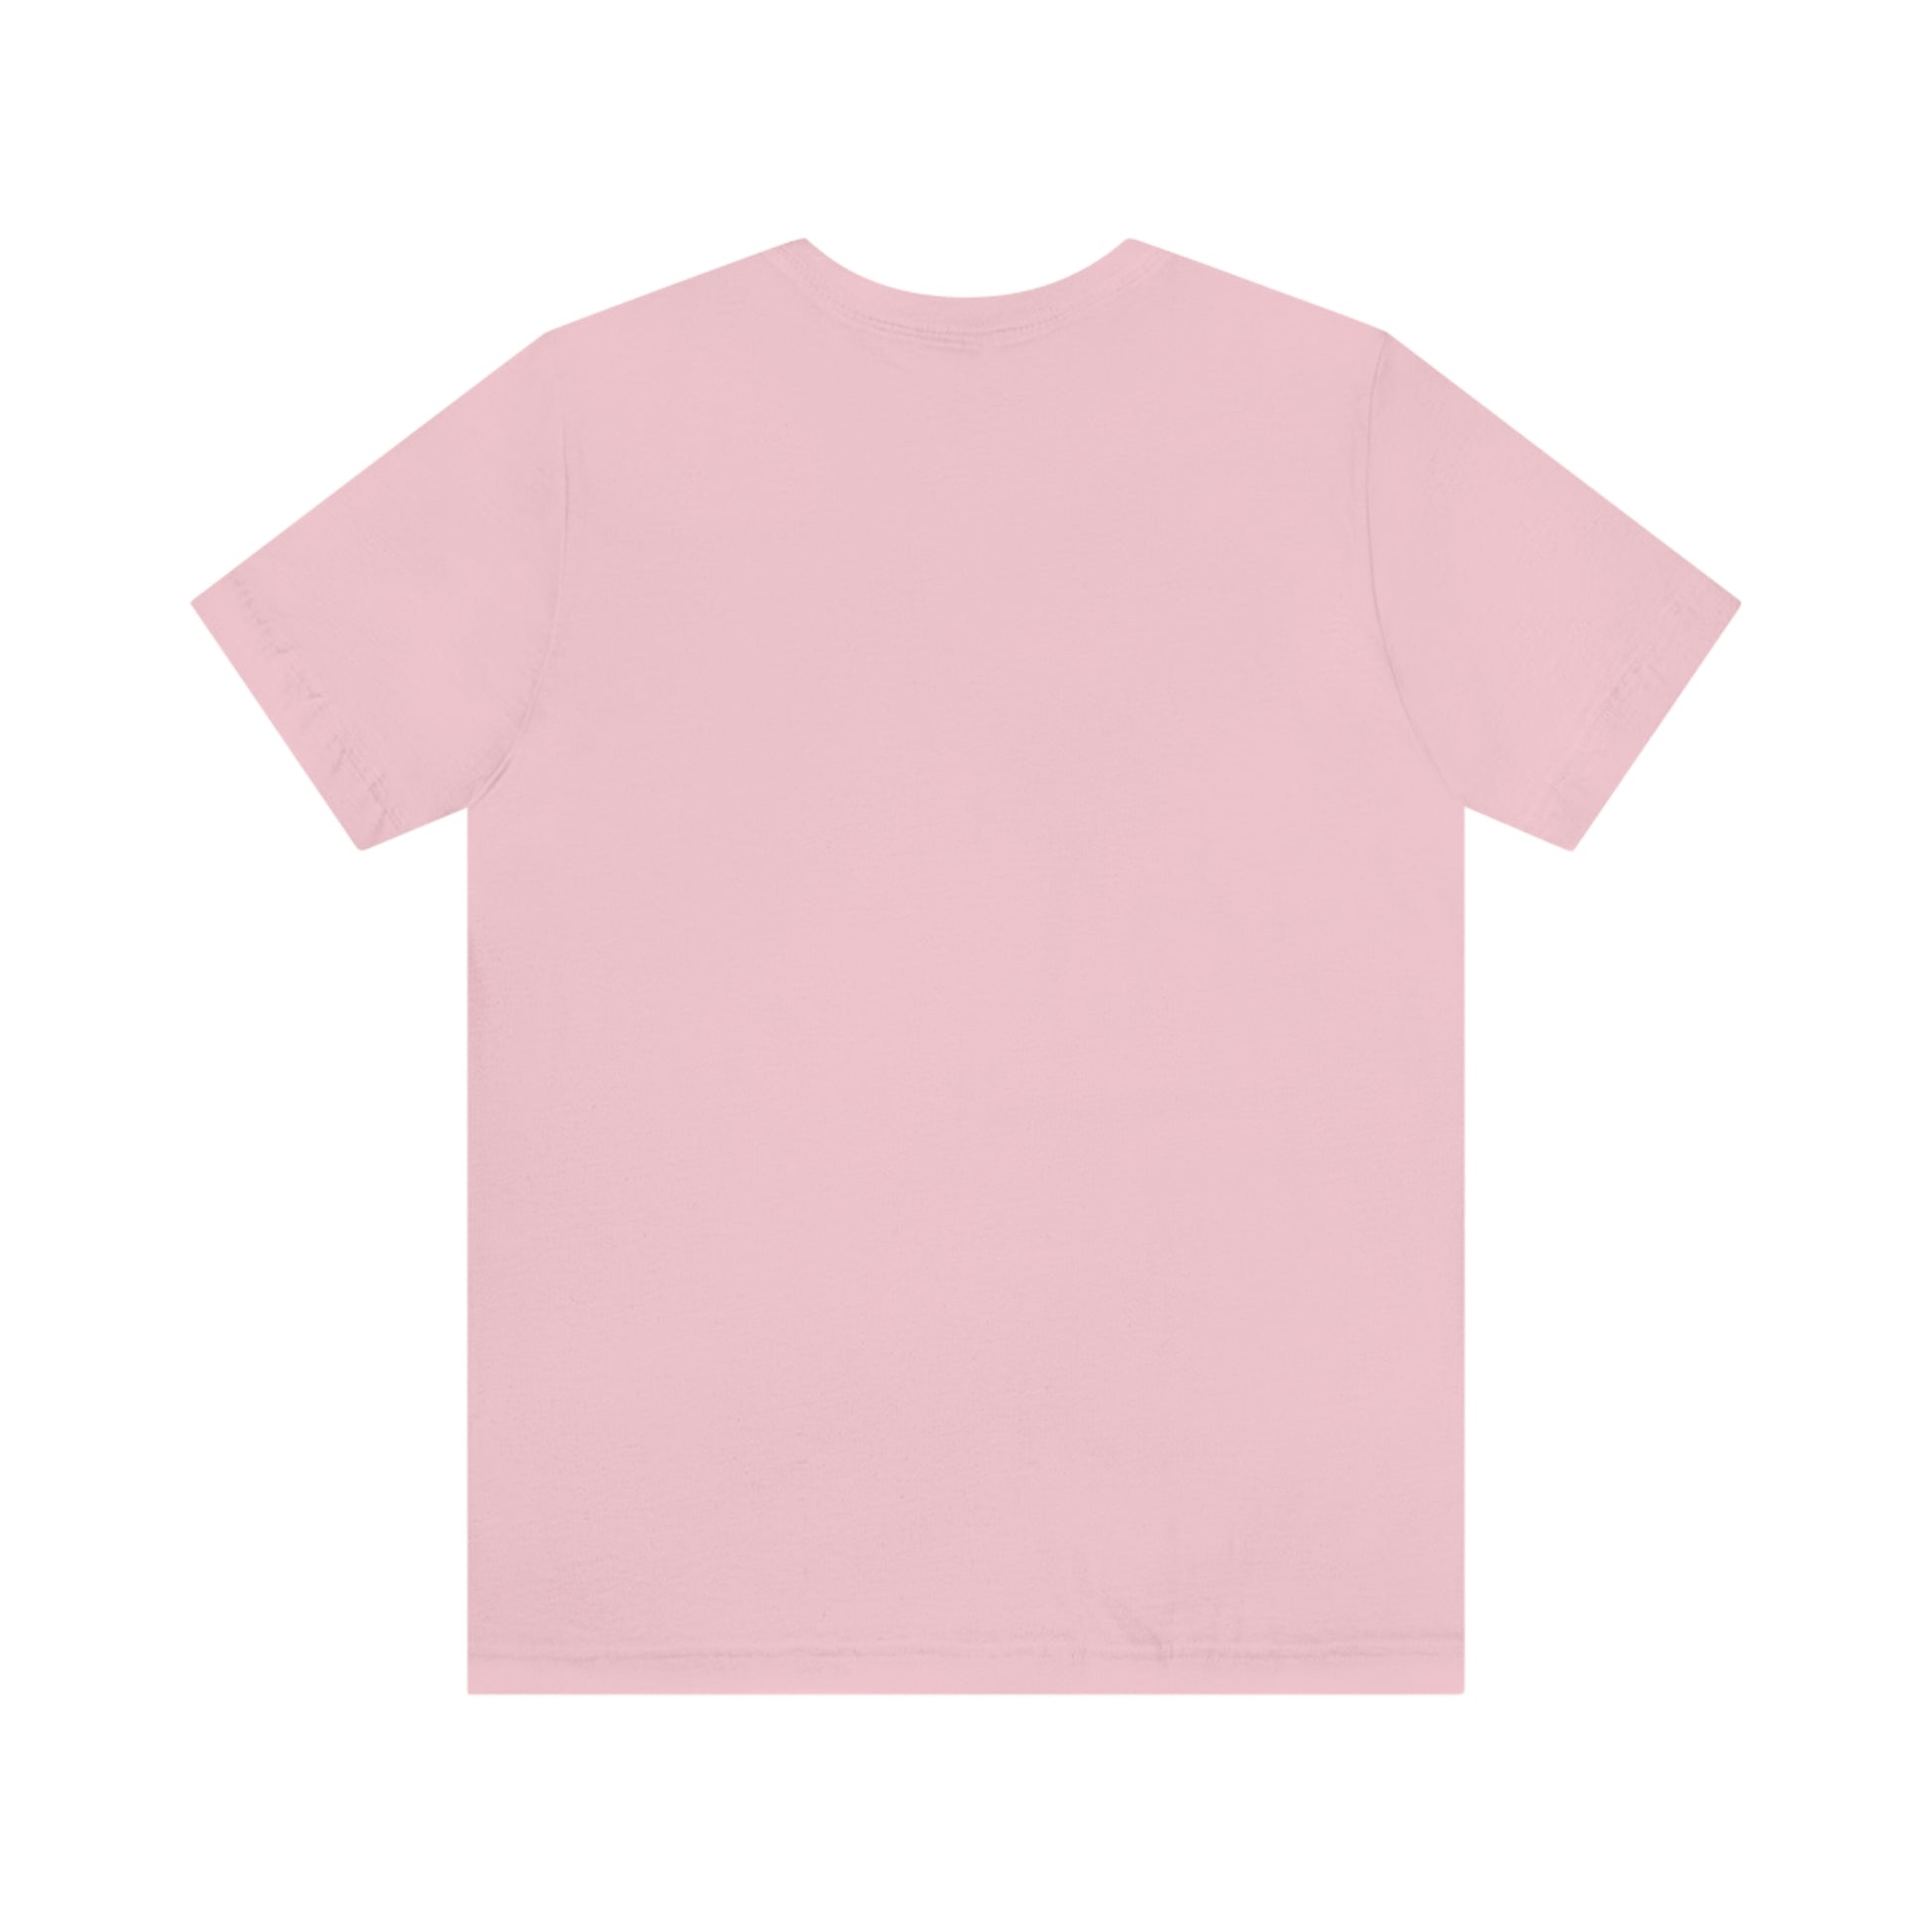 Slowpoke Team Shirt Pink